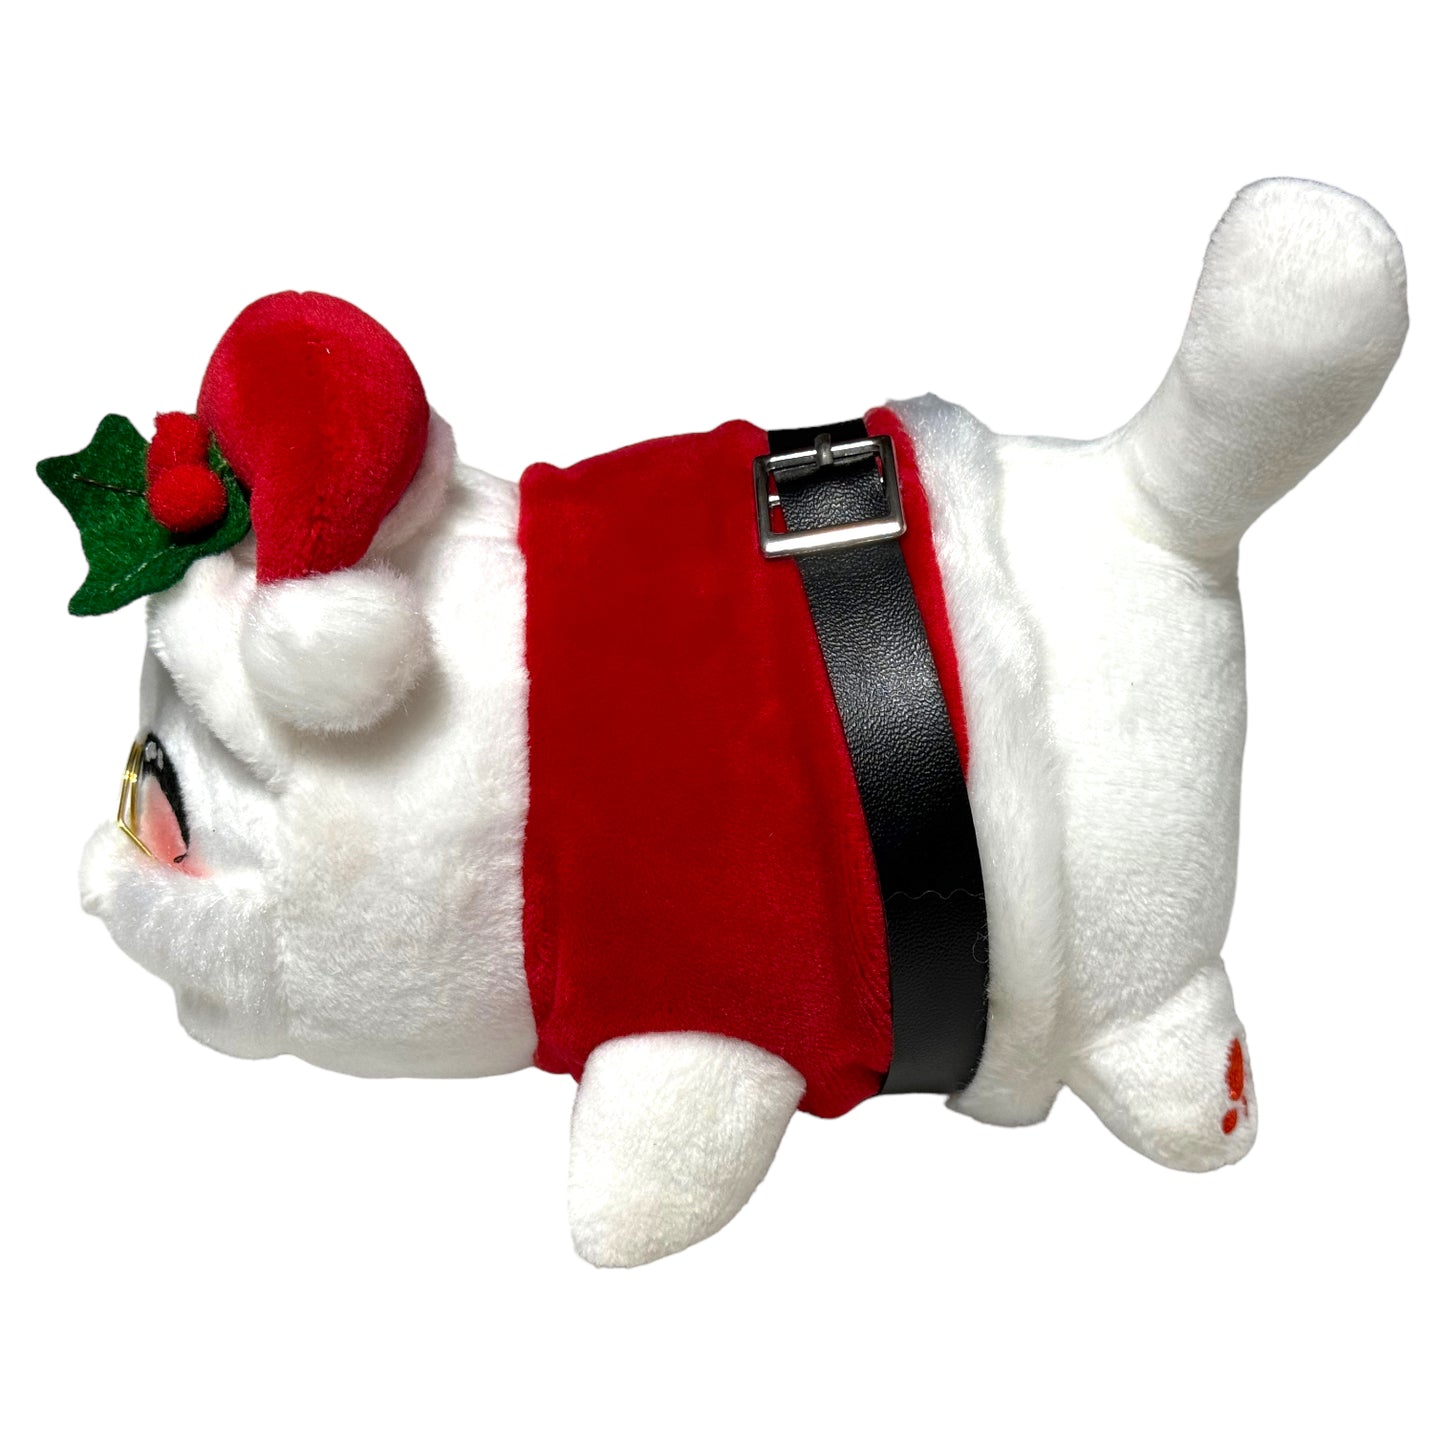 SANTA CAT - MeeMeows HAPPY HOLIDAYS EGG from Aphmau (NEW) RARE Christmas Plush